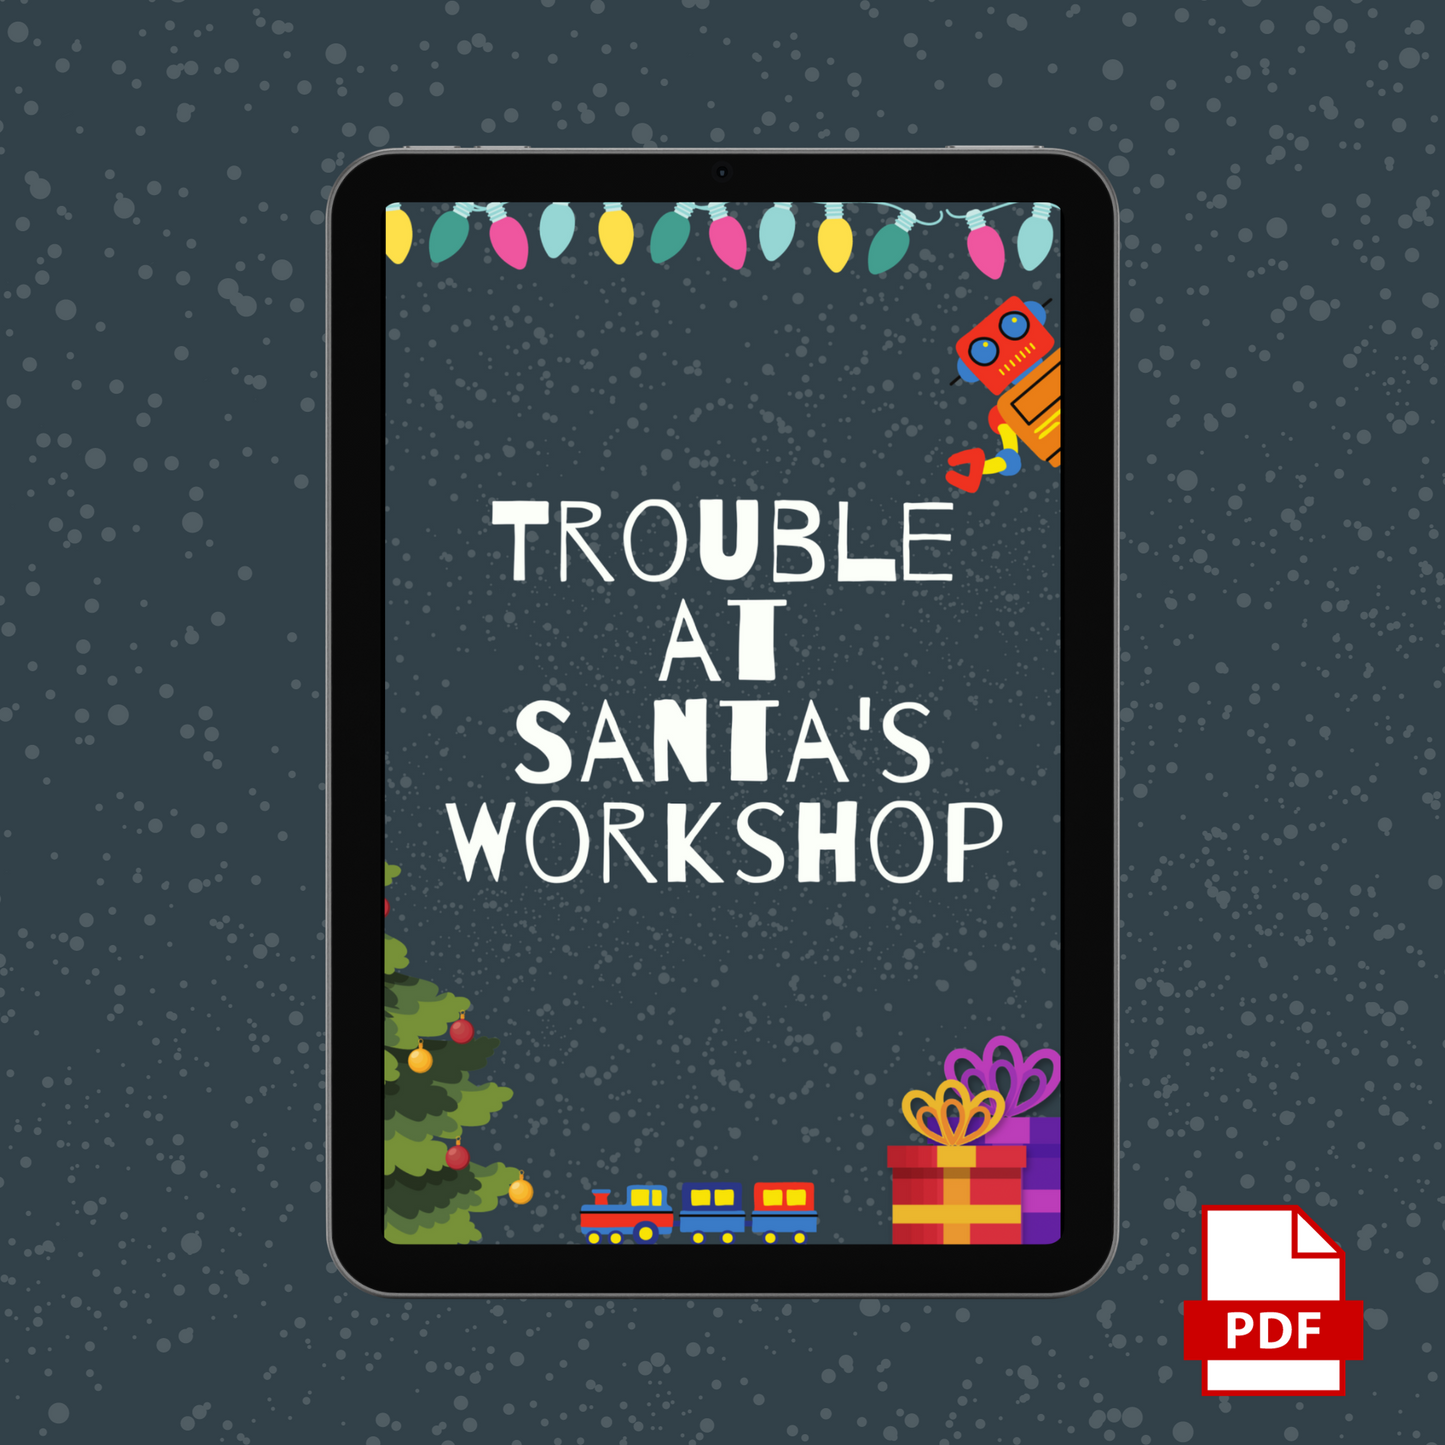 Trouble at Santa's Workshop (PDF)